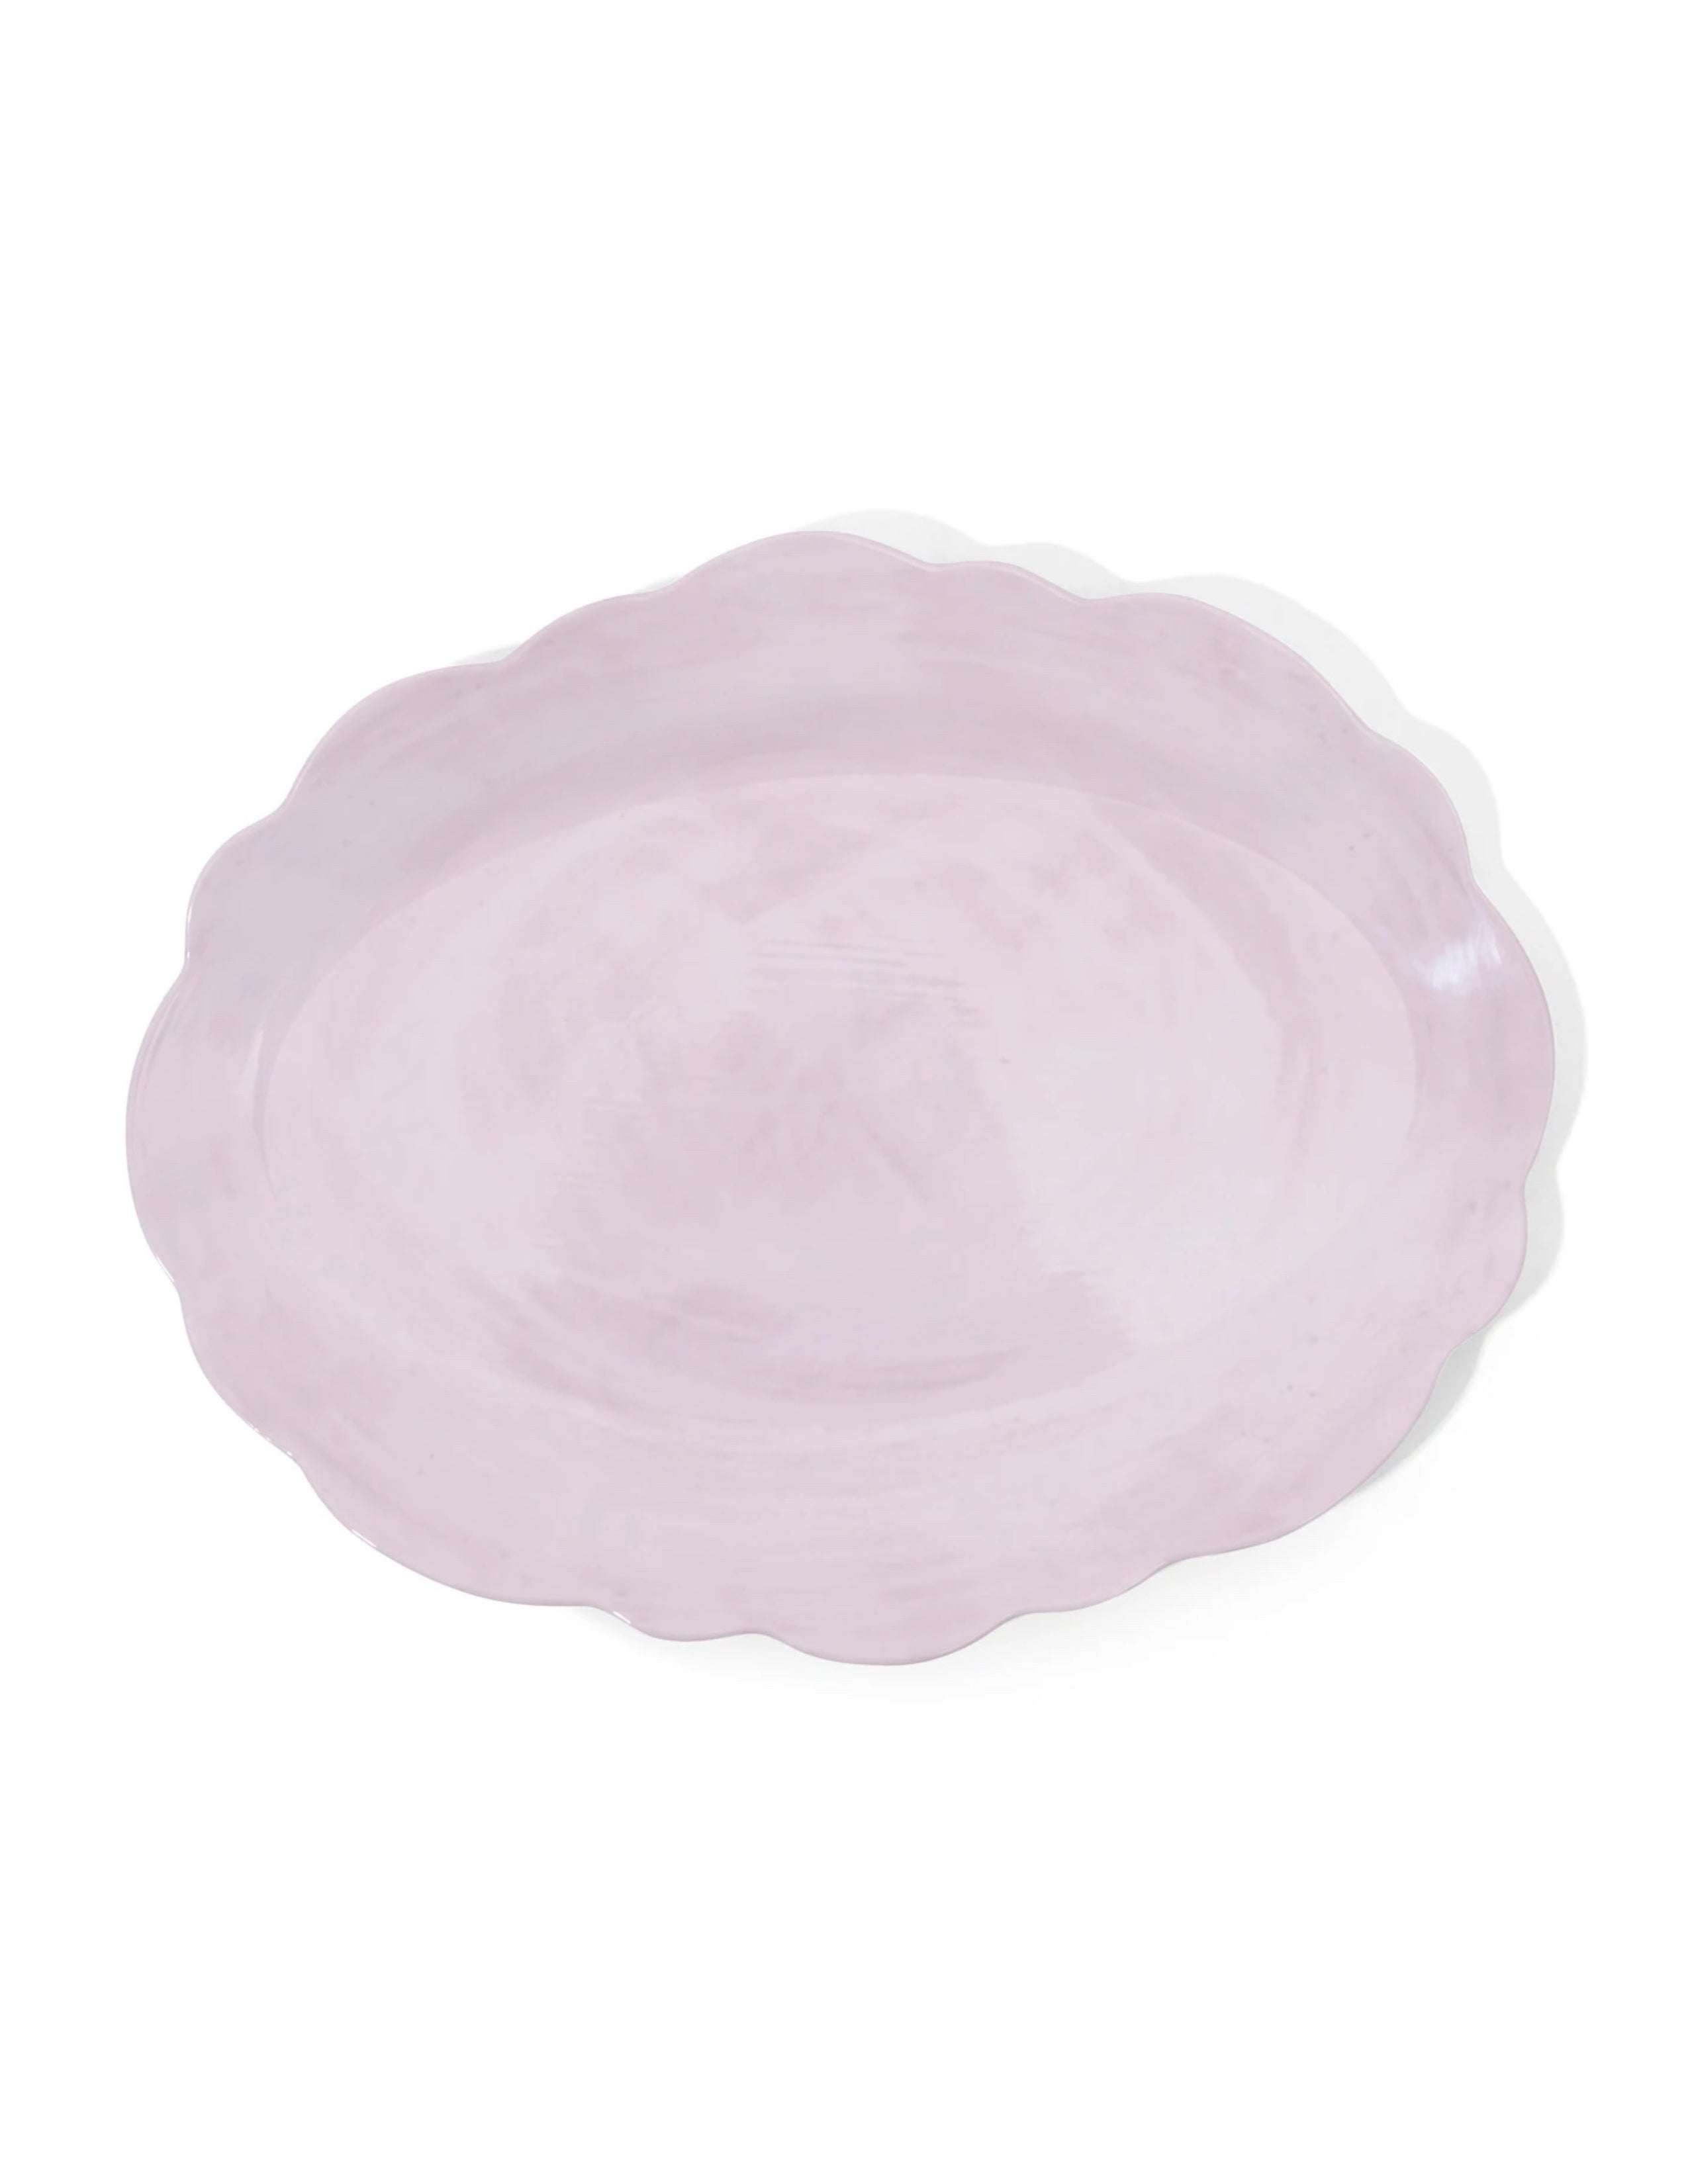 Scalloped Oval Serving Platter - Pottery White